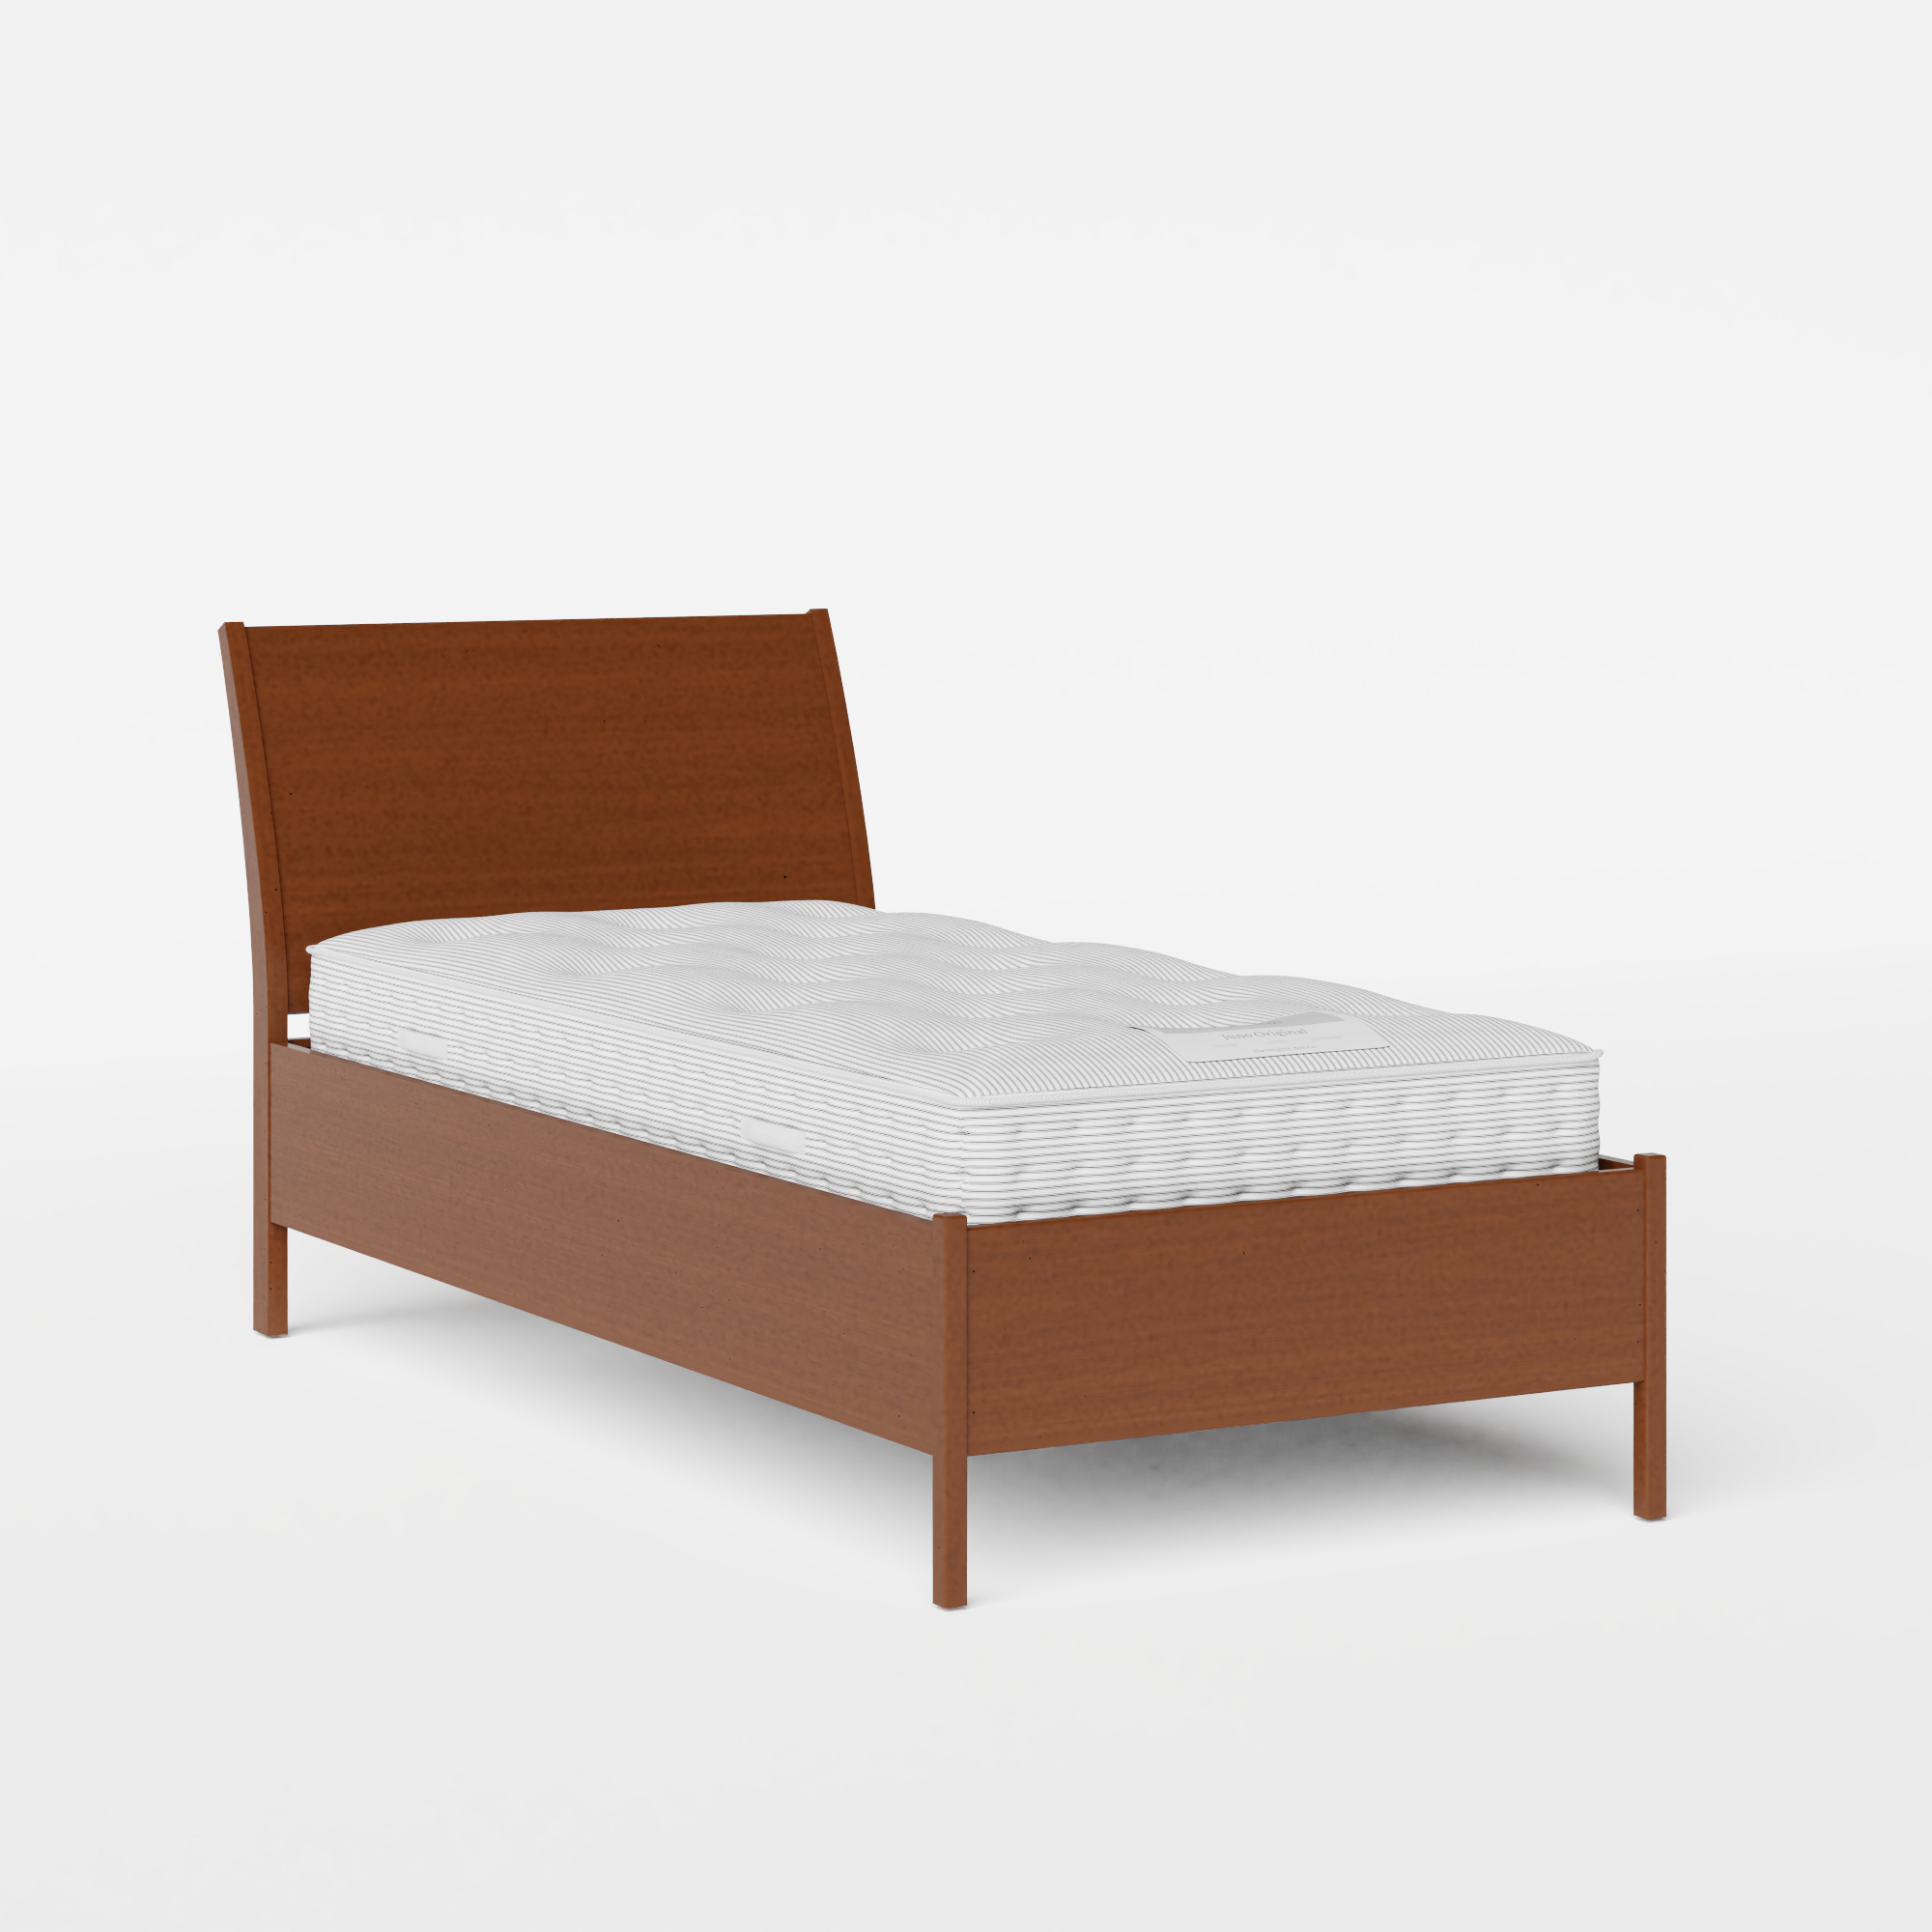 Hunt single wood bed in dark cherry with Juno mattress